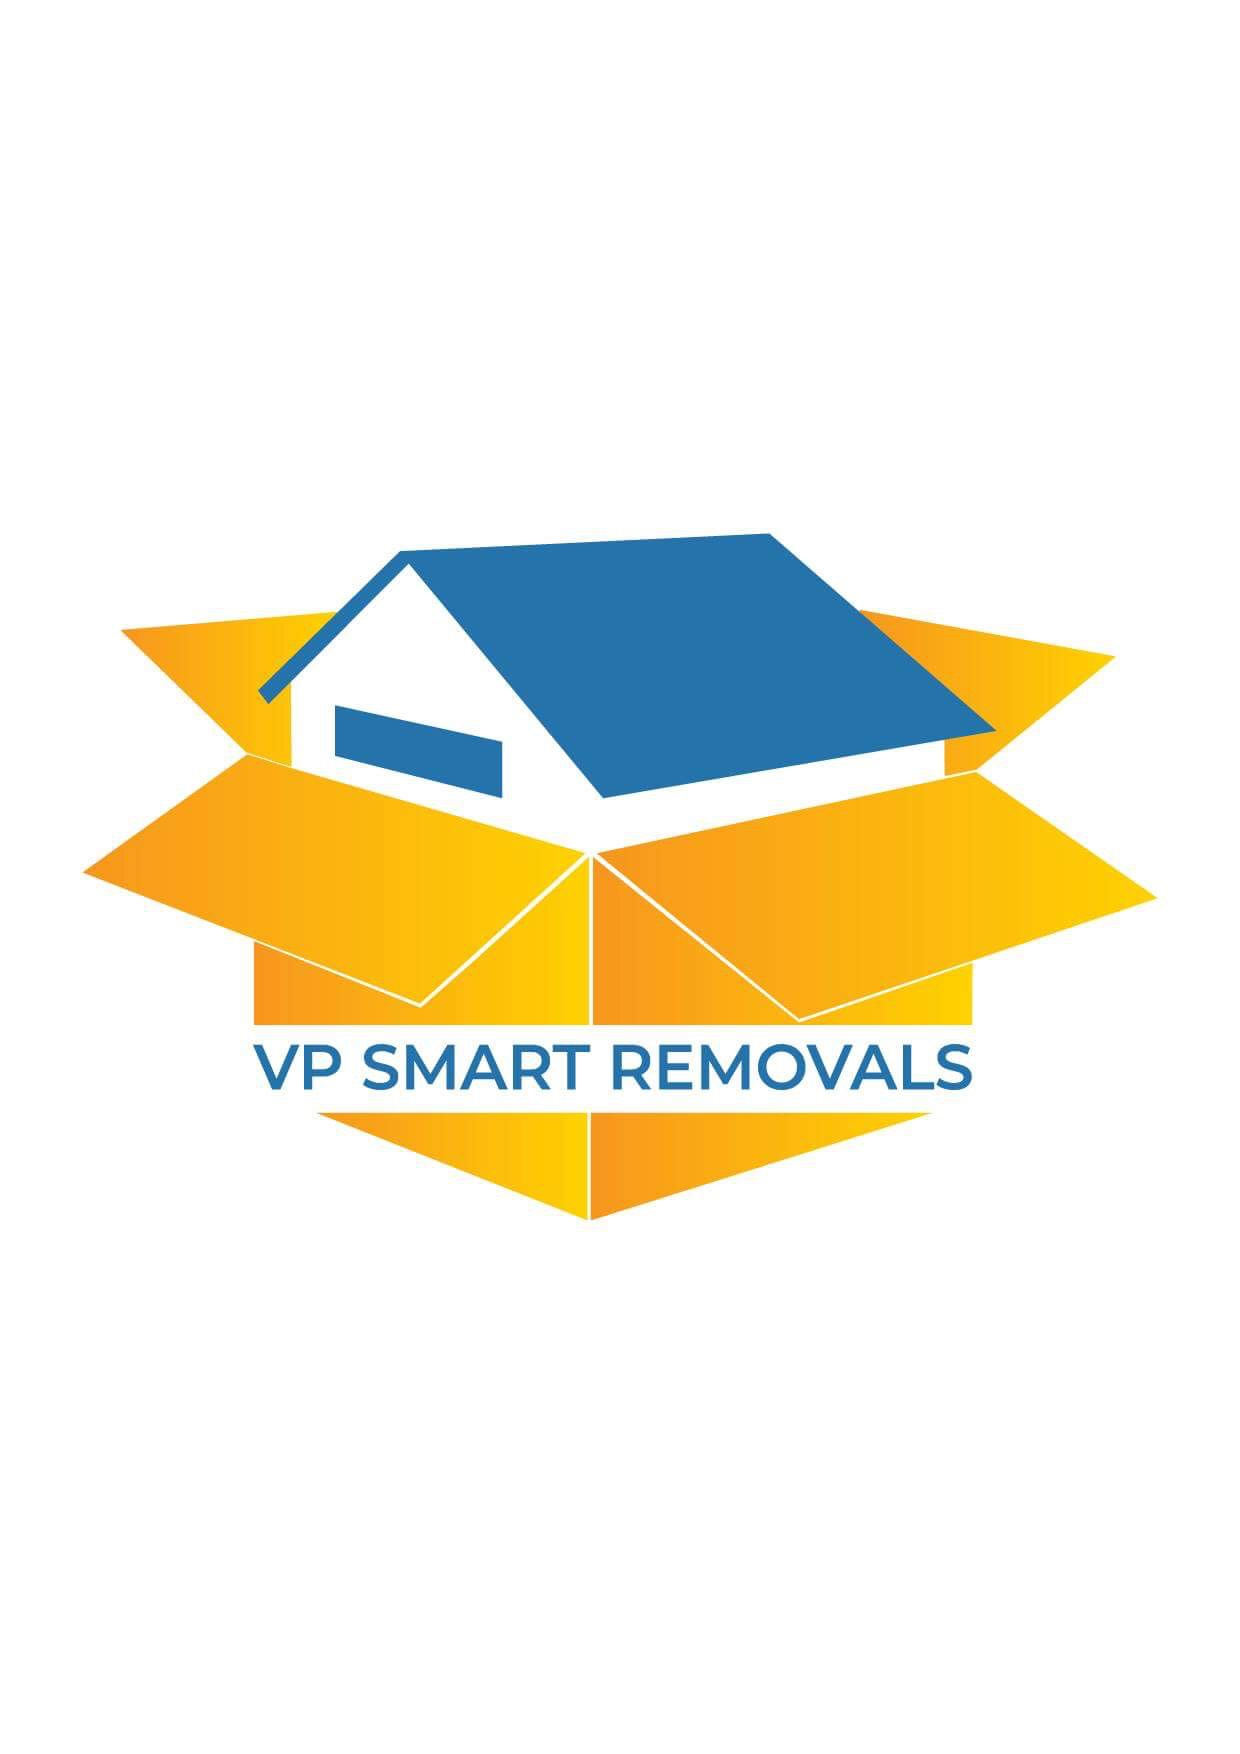 VP Smart Removals logo